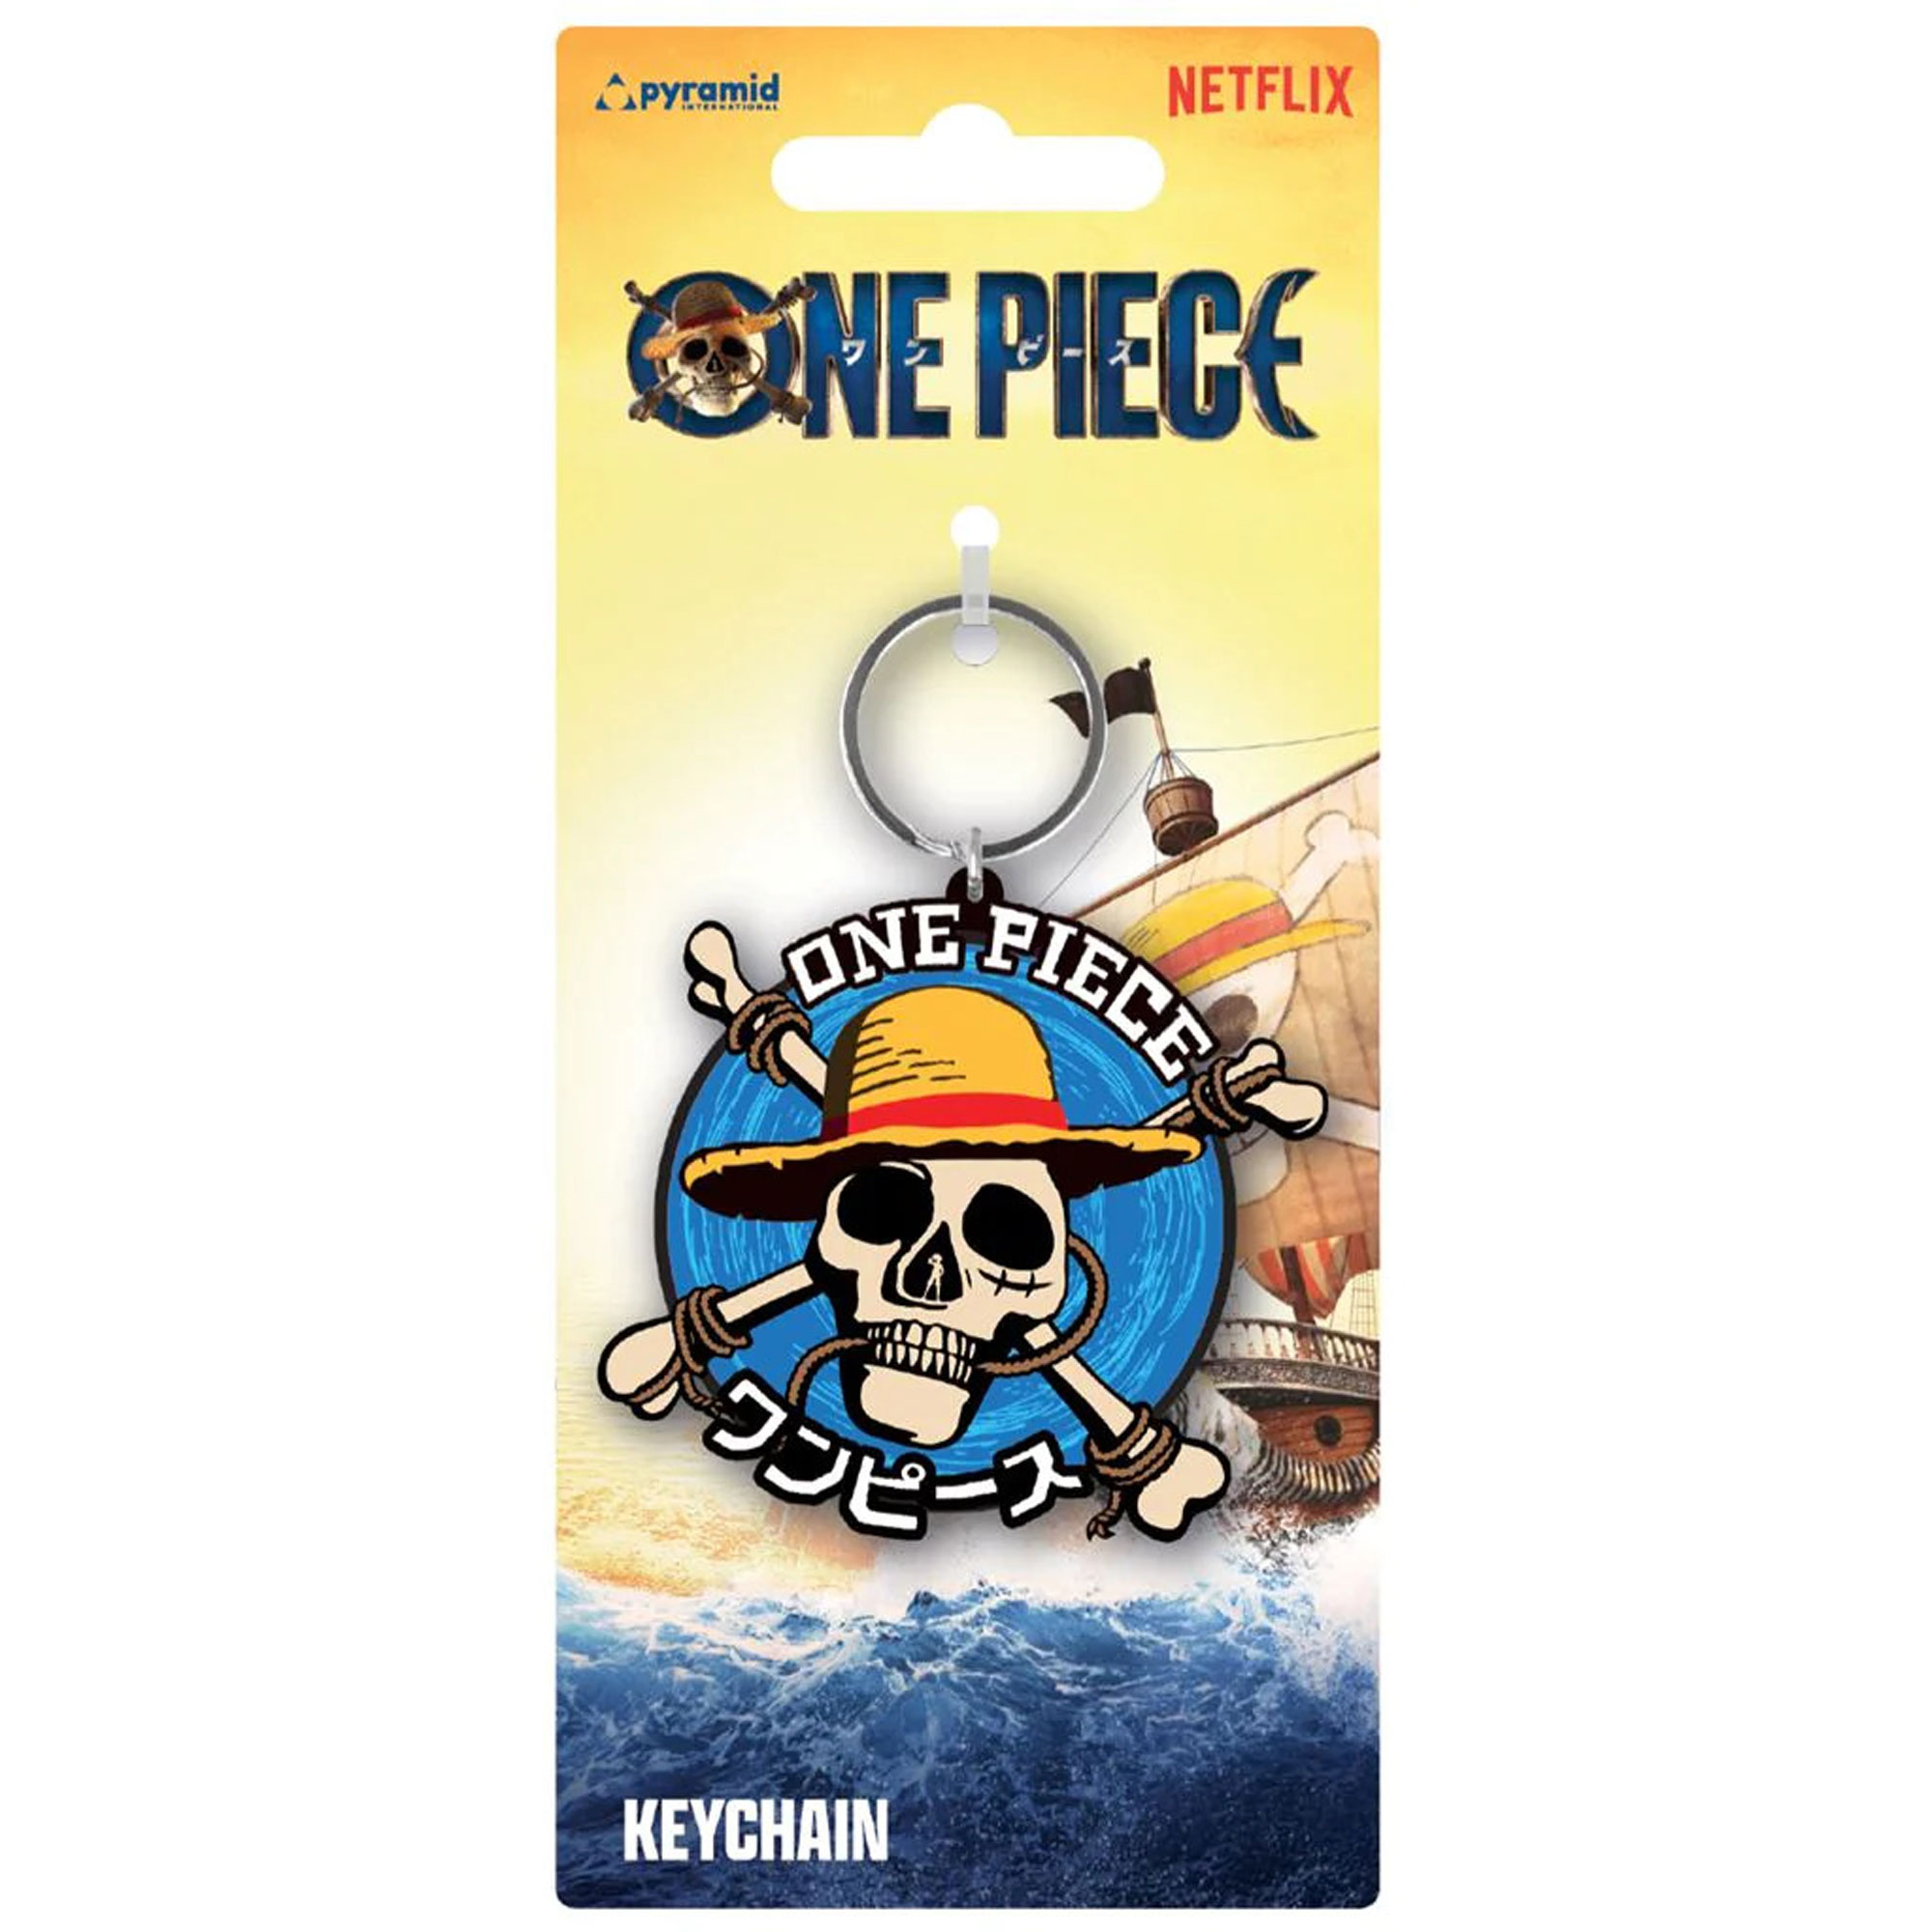 One Piece - Straw Hat Crew Icon